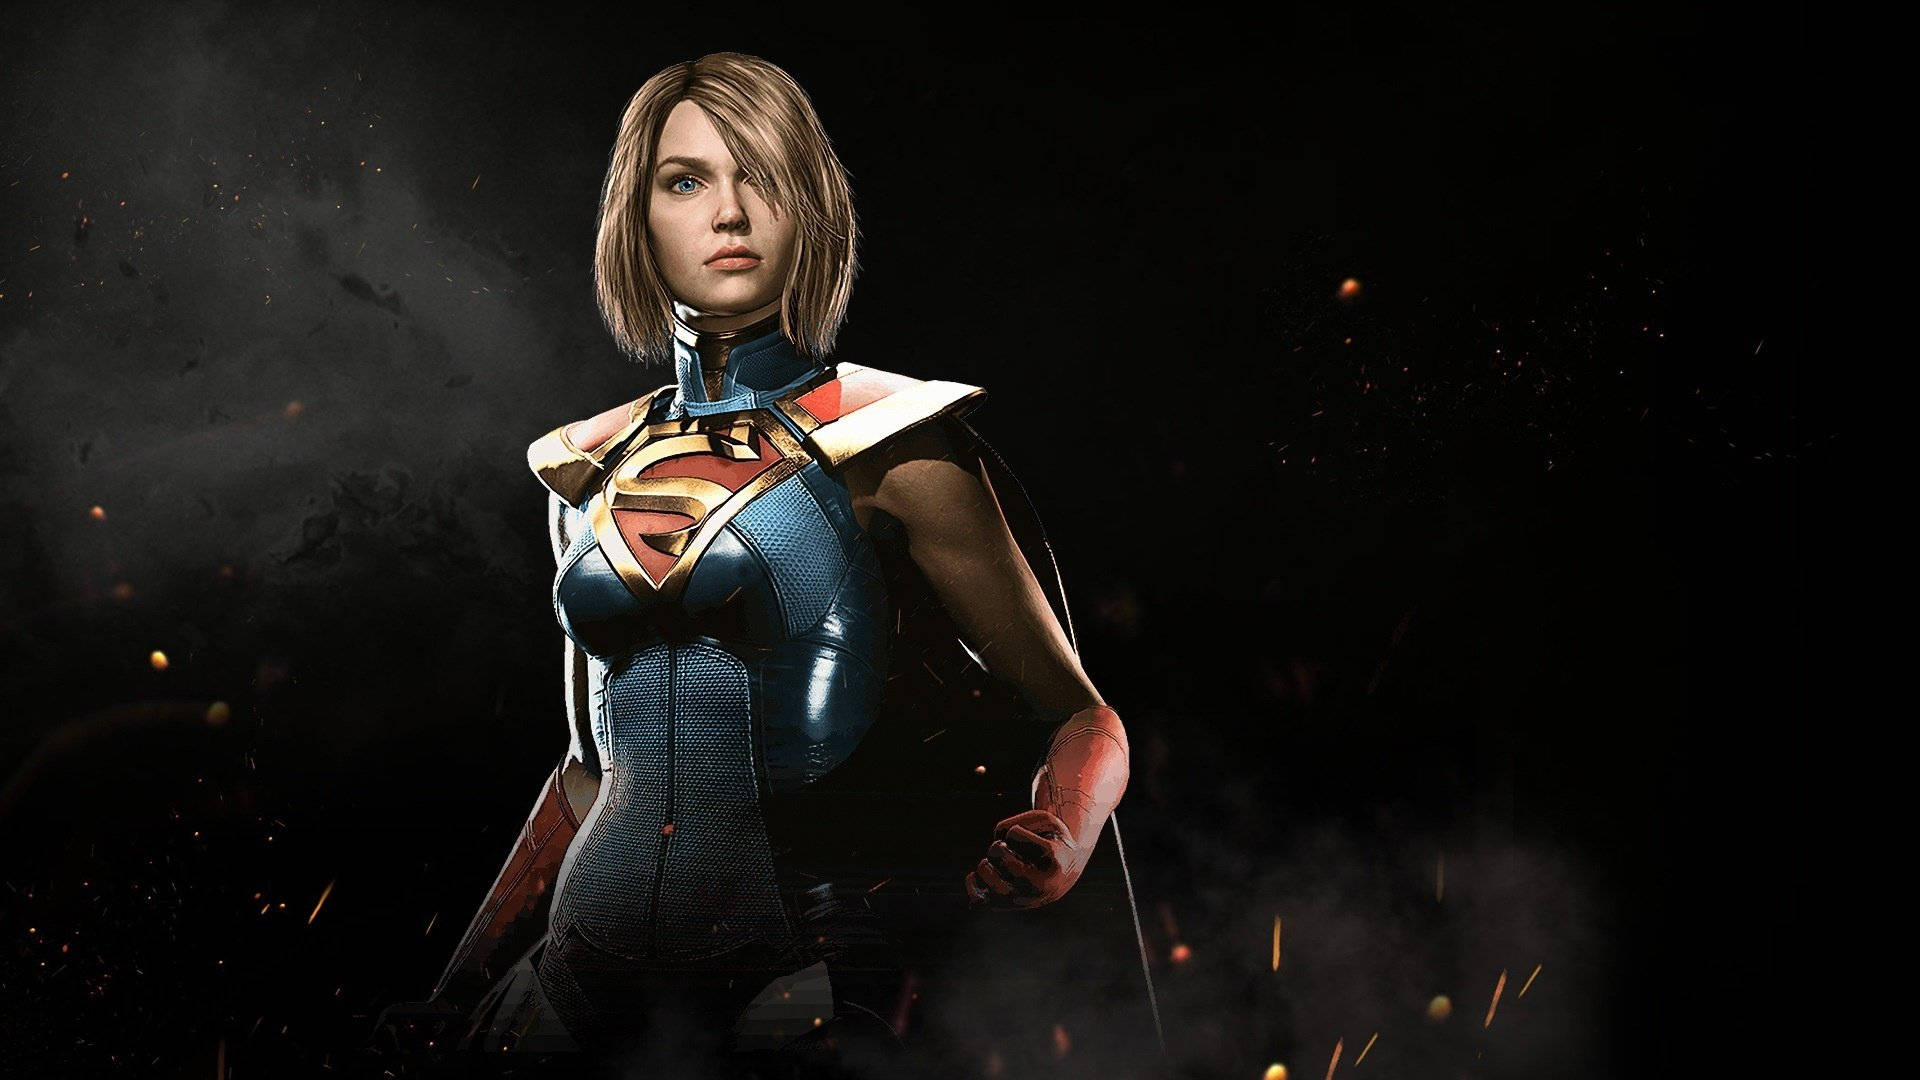 Supergirl Of Injustice 2 Wallpaper